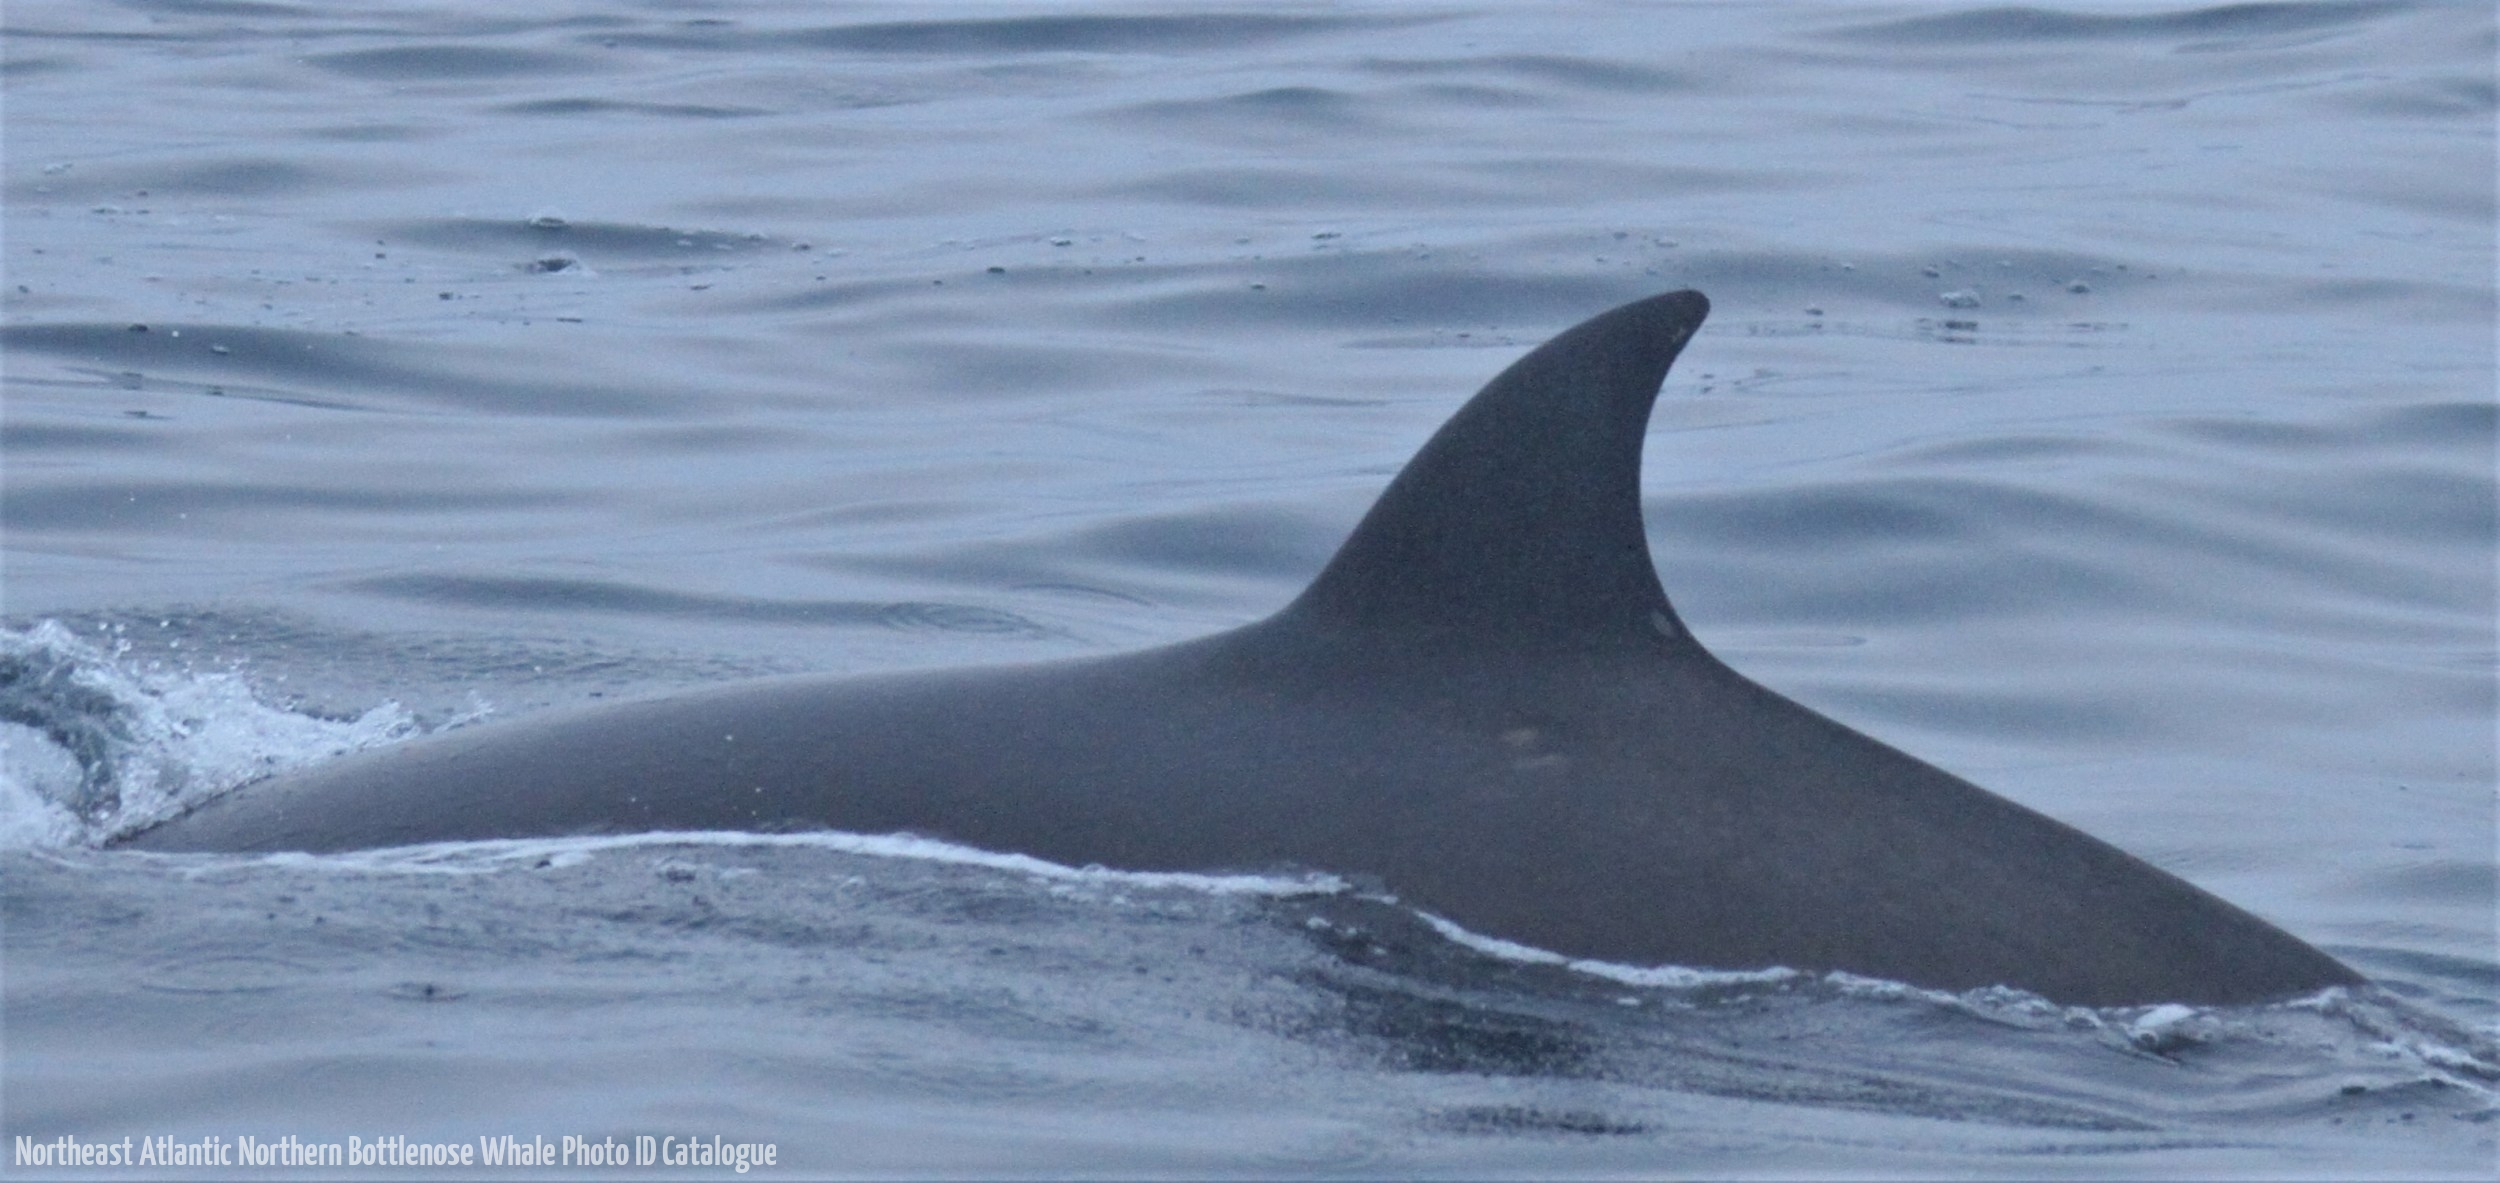 Whale ID: 0013,  Date taken: 01-07-2013,  Photographer: Paul H. Ensor